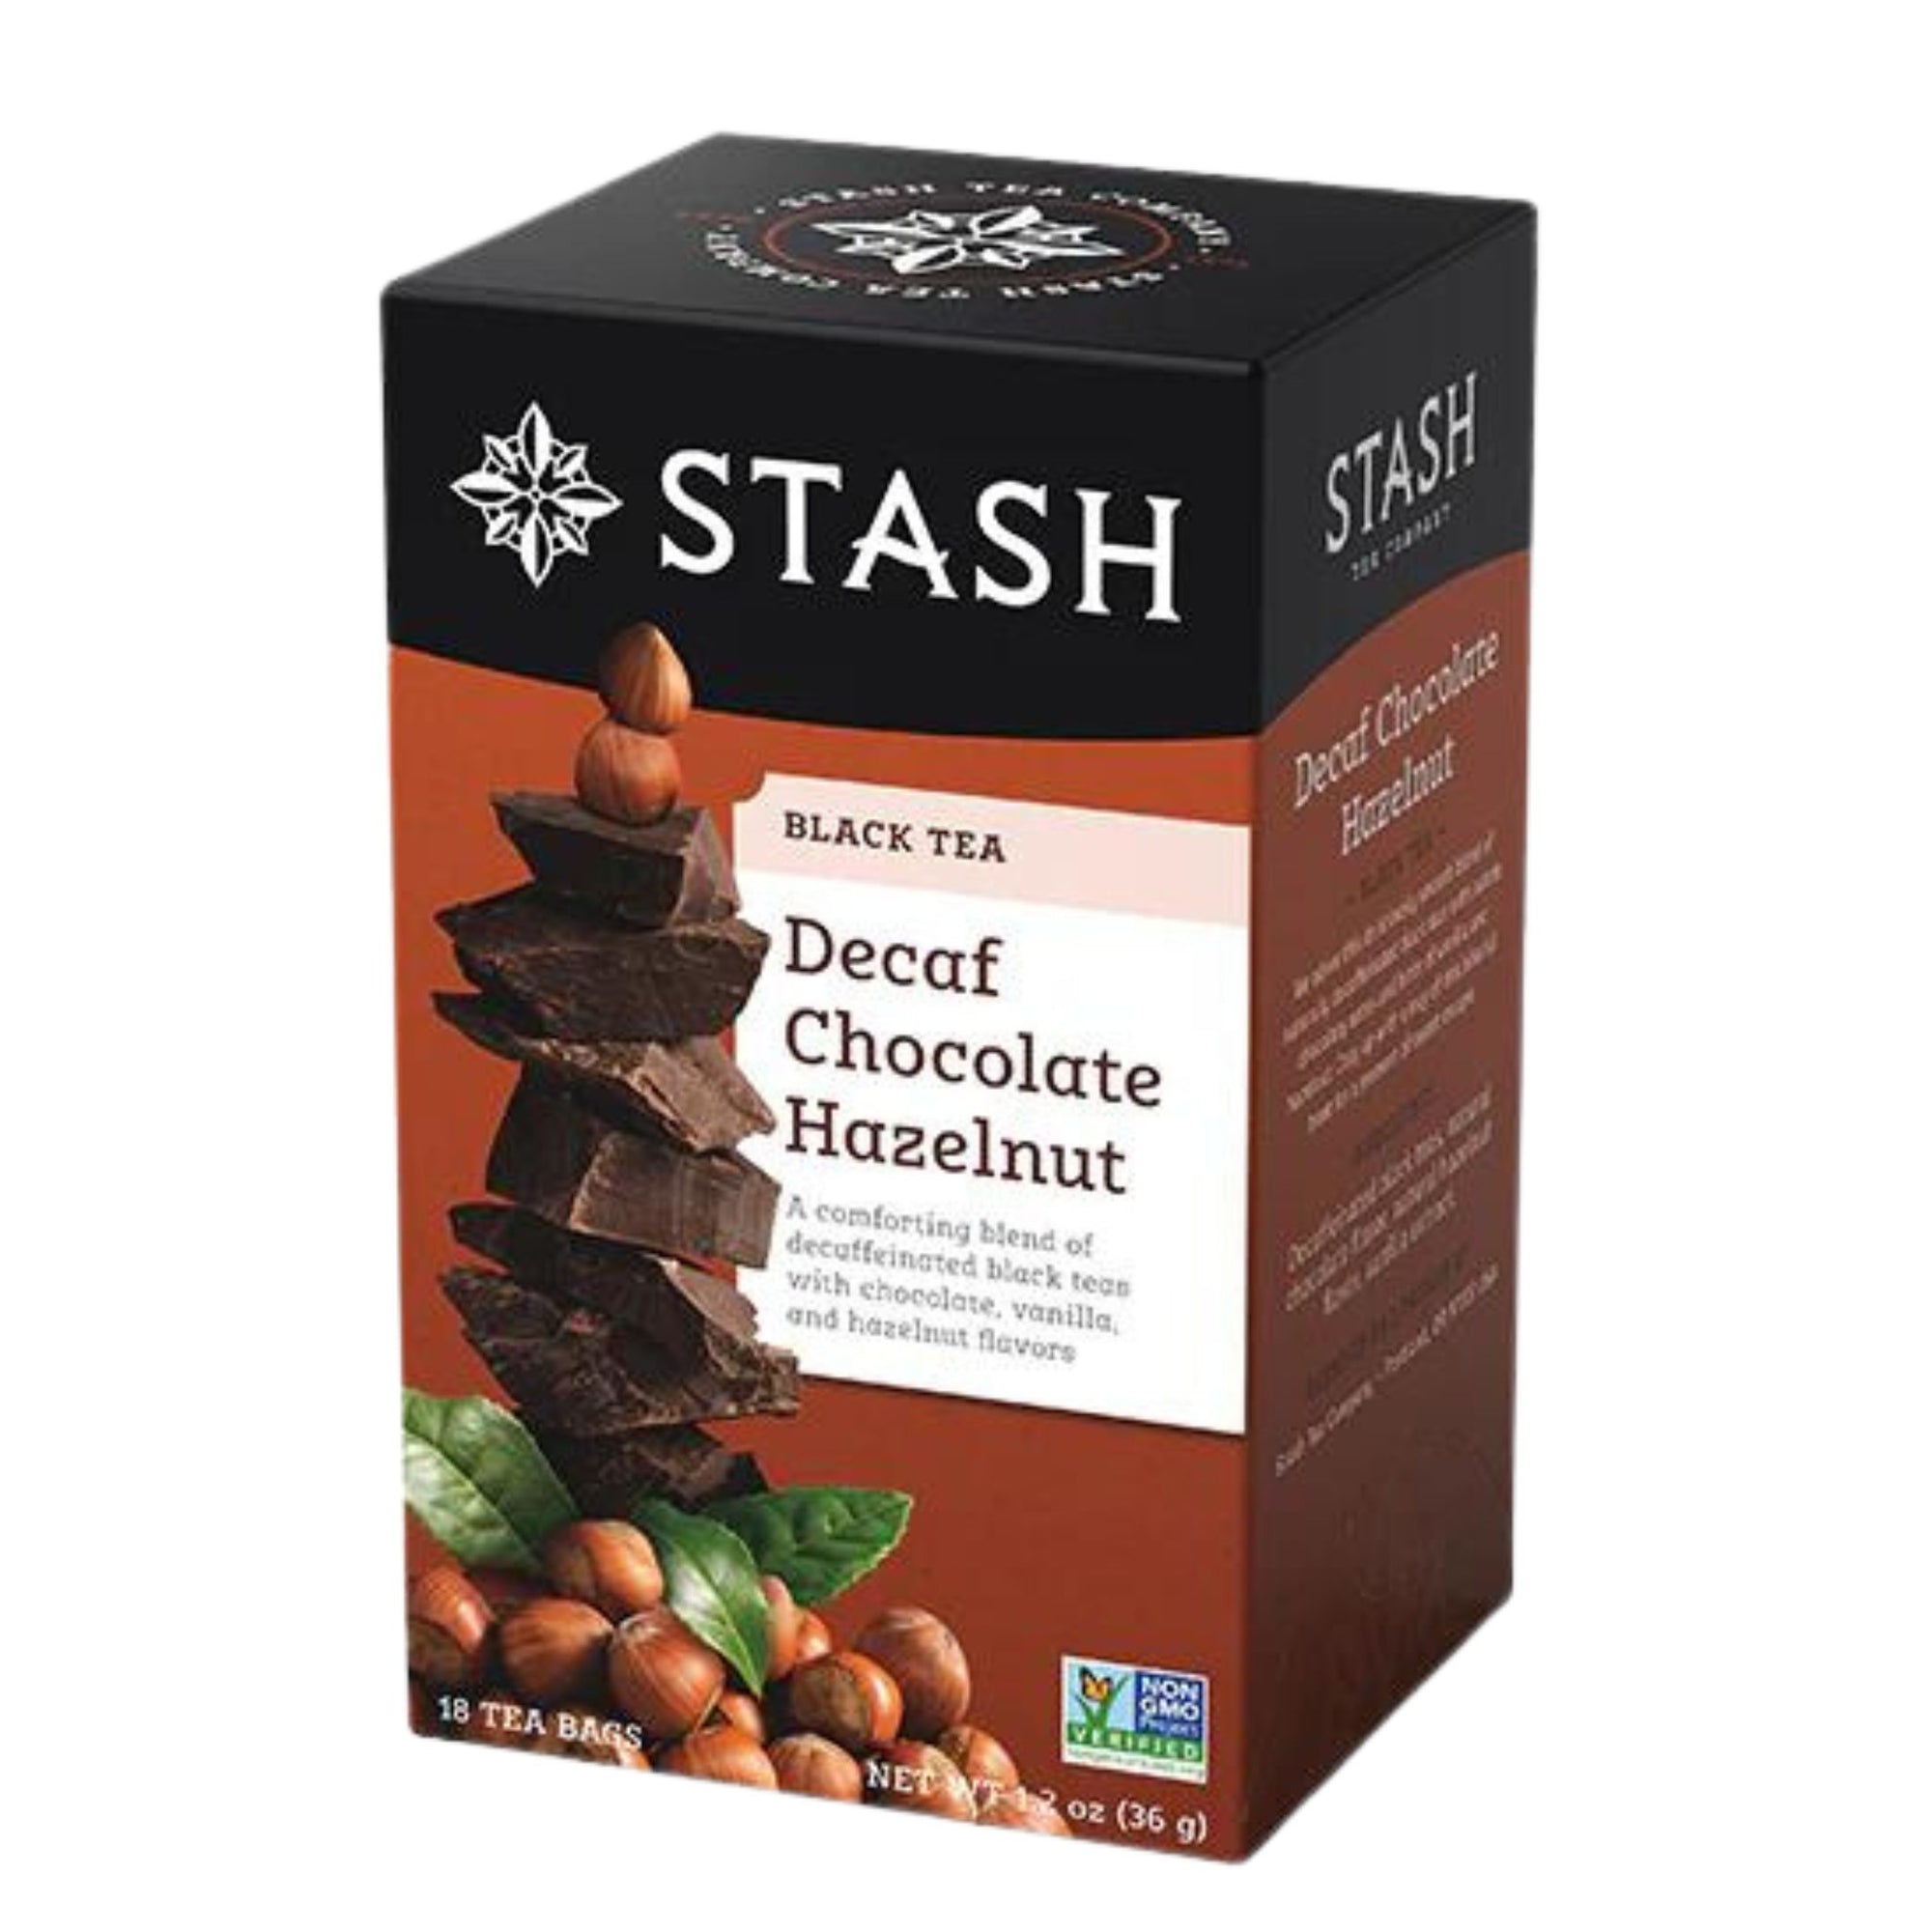 Stash Decaf Chocolate Hazelnut Black Tea - 18 tea bags in a box - A comforting blend of decaffeinated black teas with chocolate, vanilla, and hazelnut flavours. 